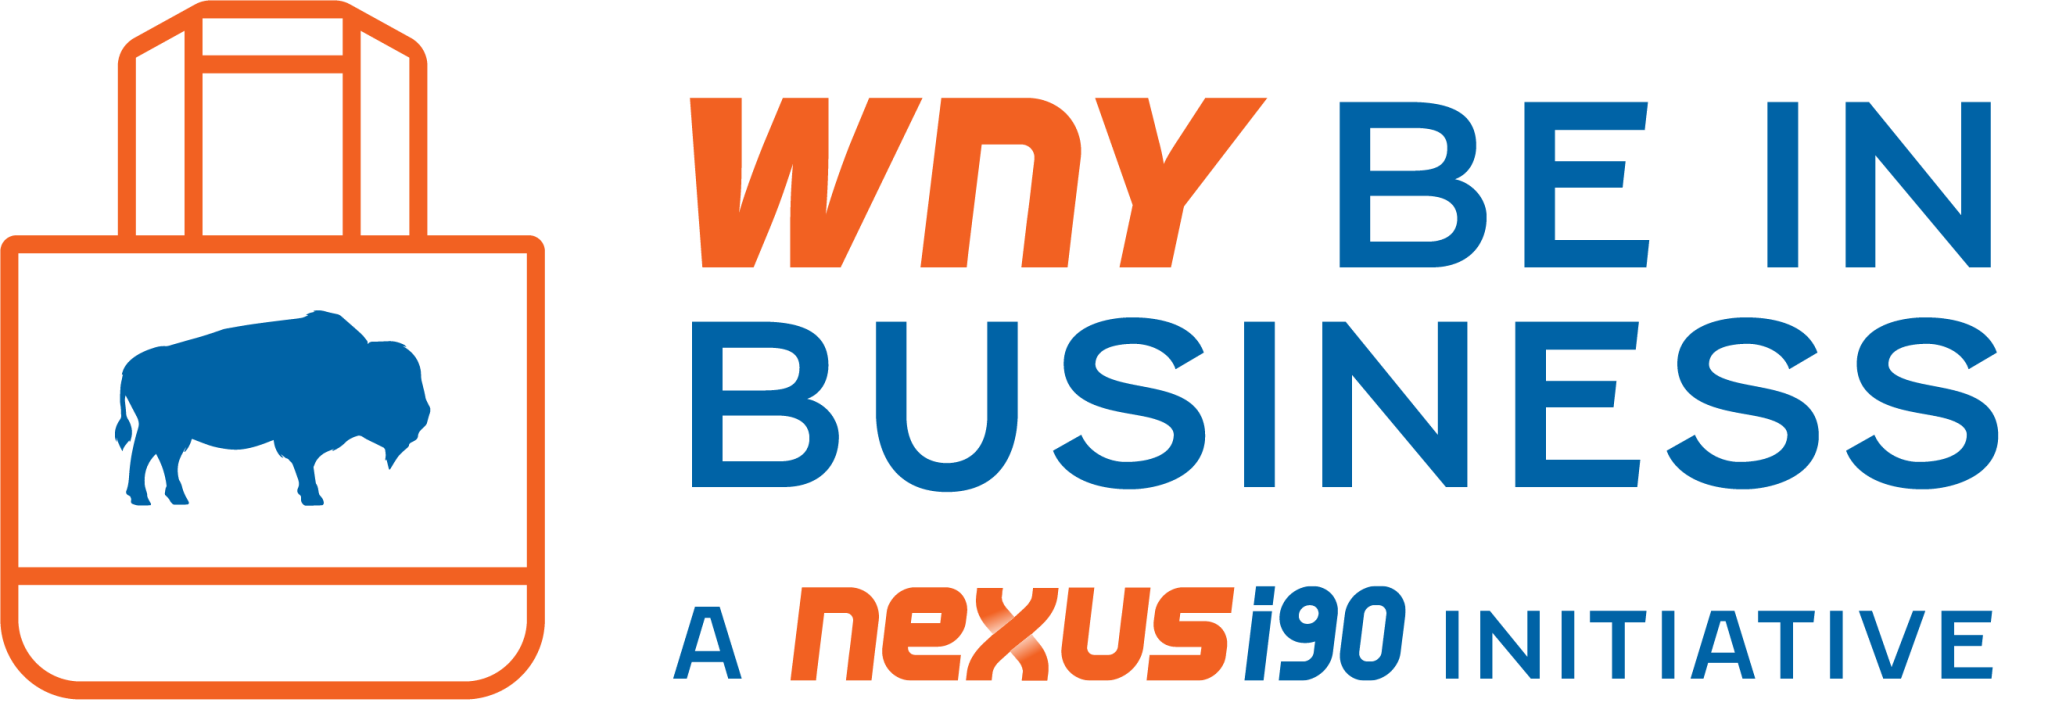 Be in Business Final logo V2-2048x706